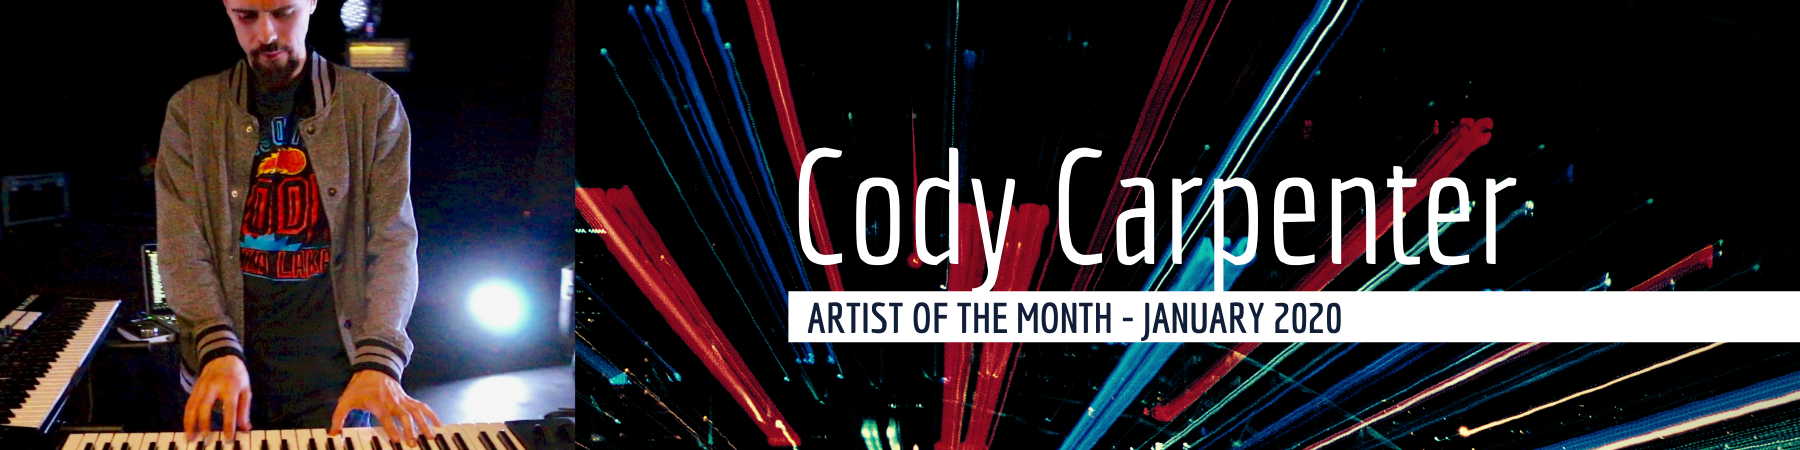 Cody Carpenter Artist Of The Month